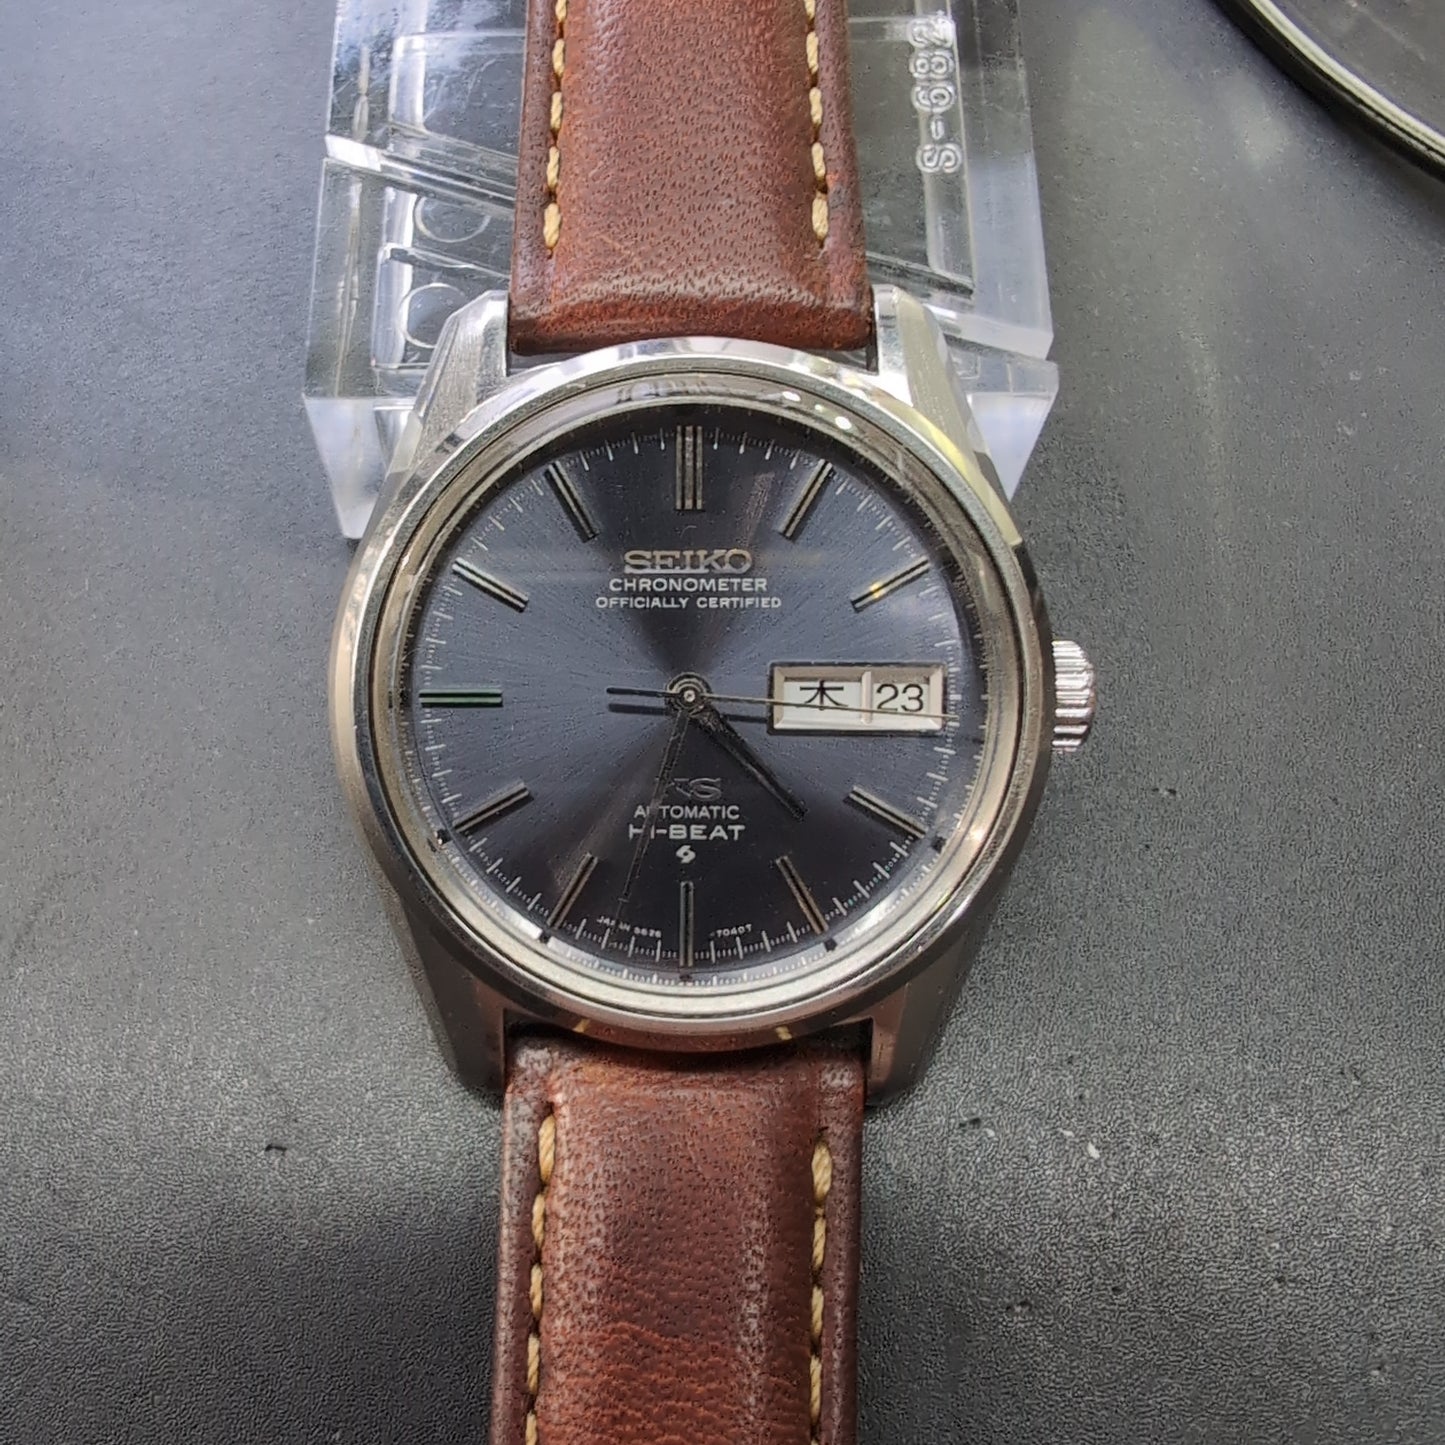 1970 Seiko KS Chronometer Officialy Certified 5626-7040